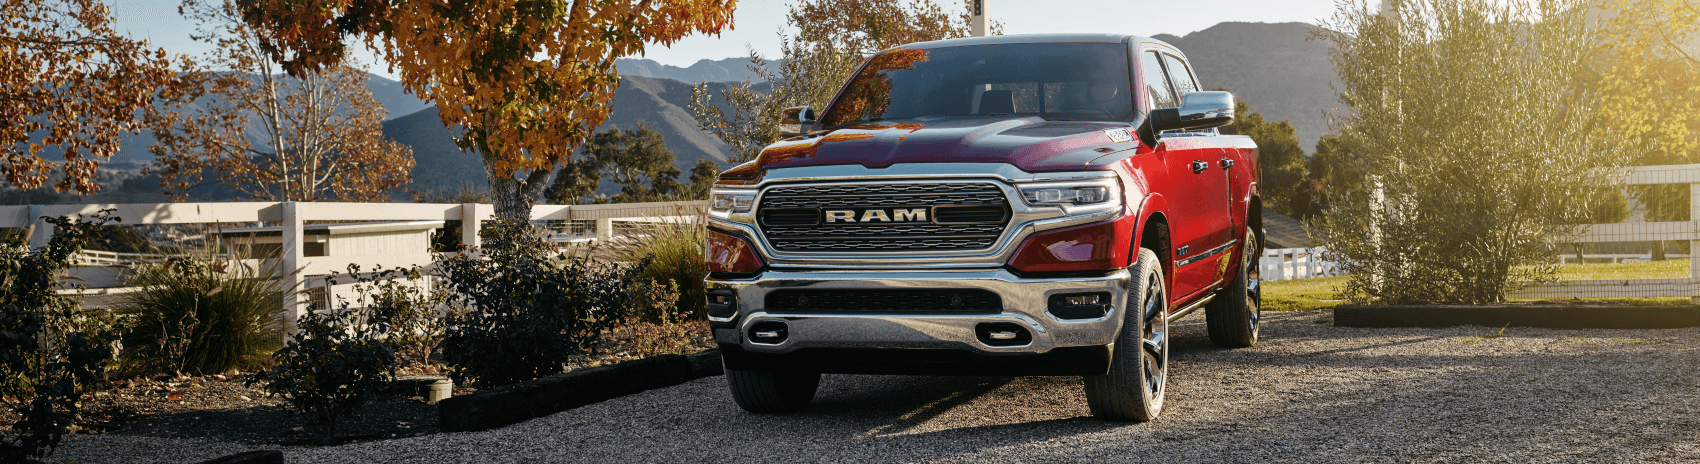 Ram Service FAQs